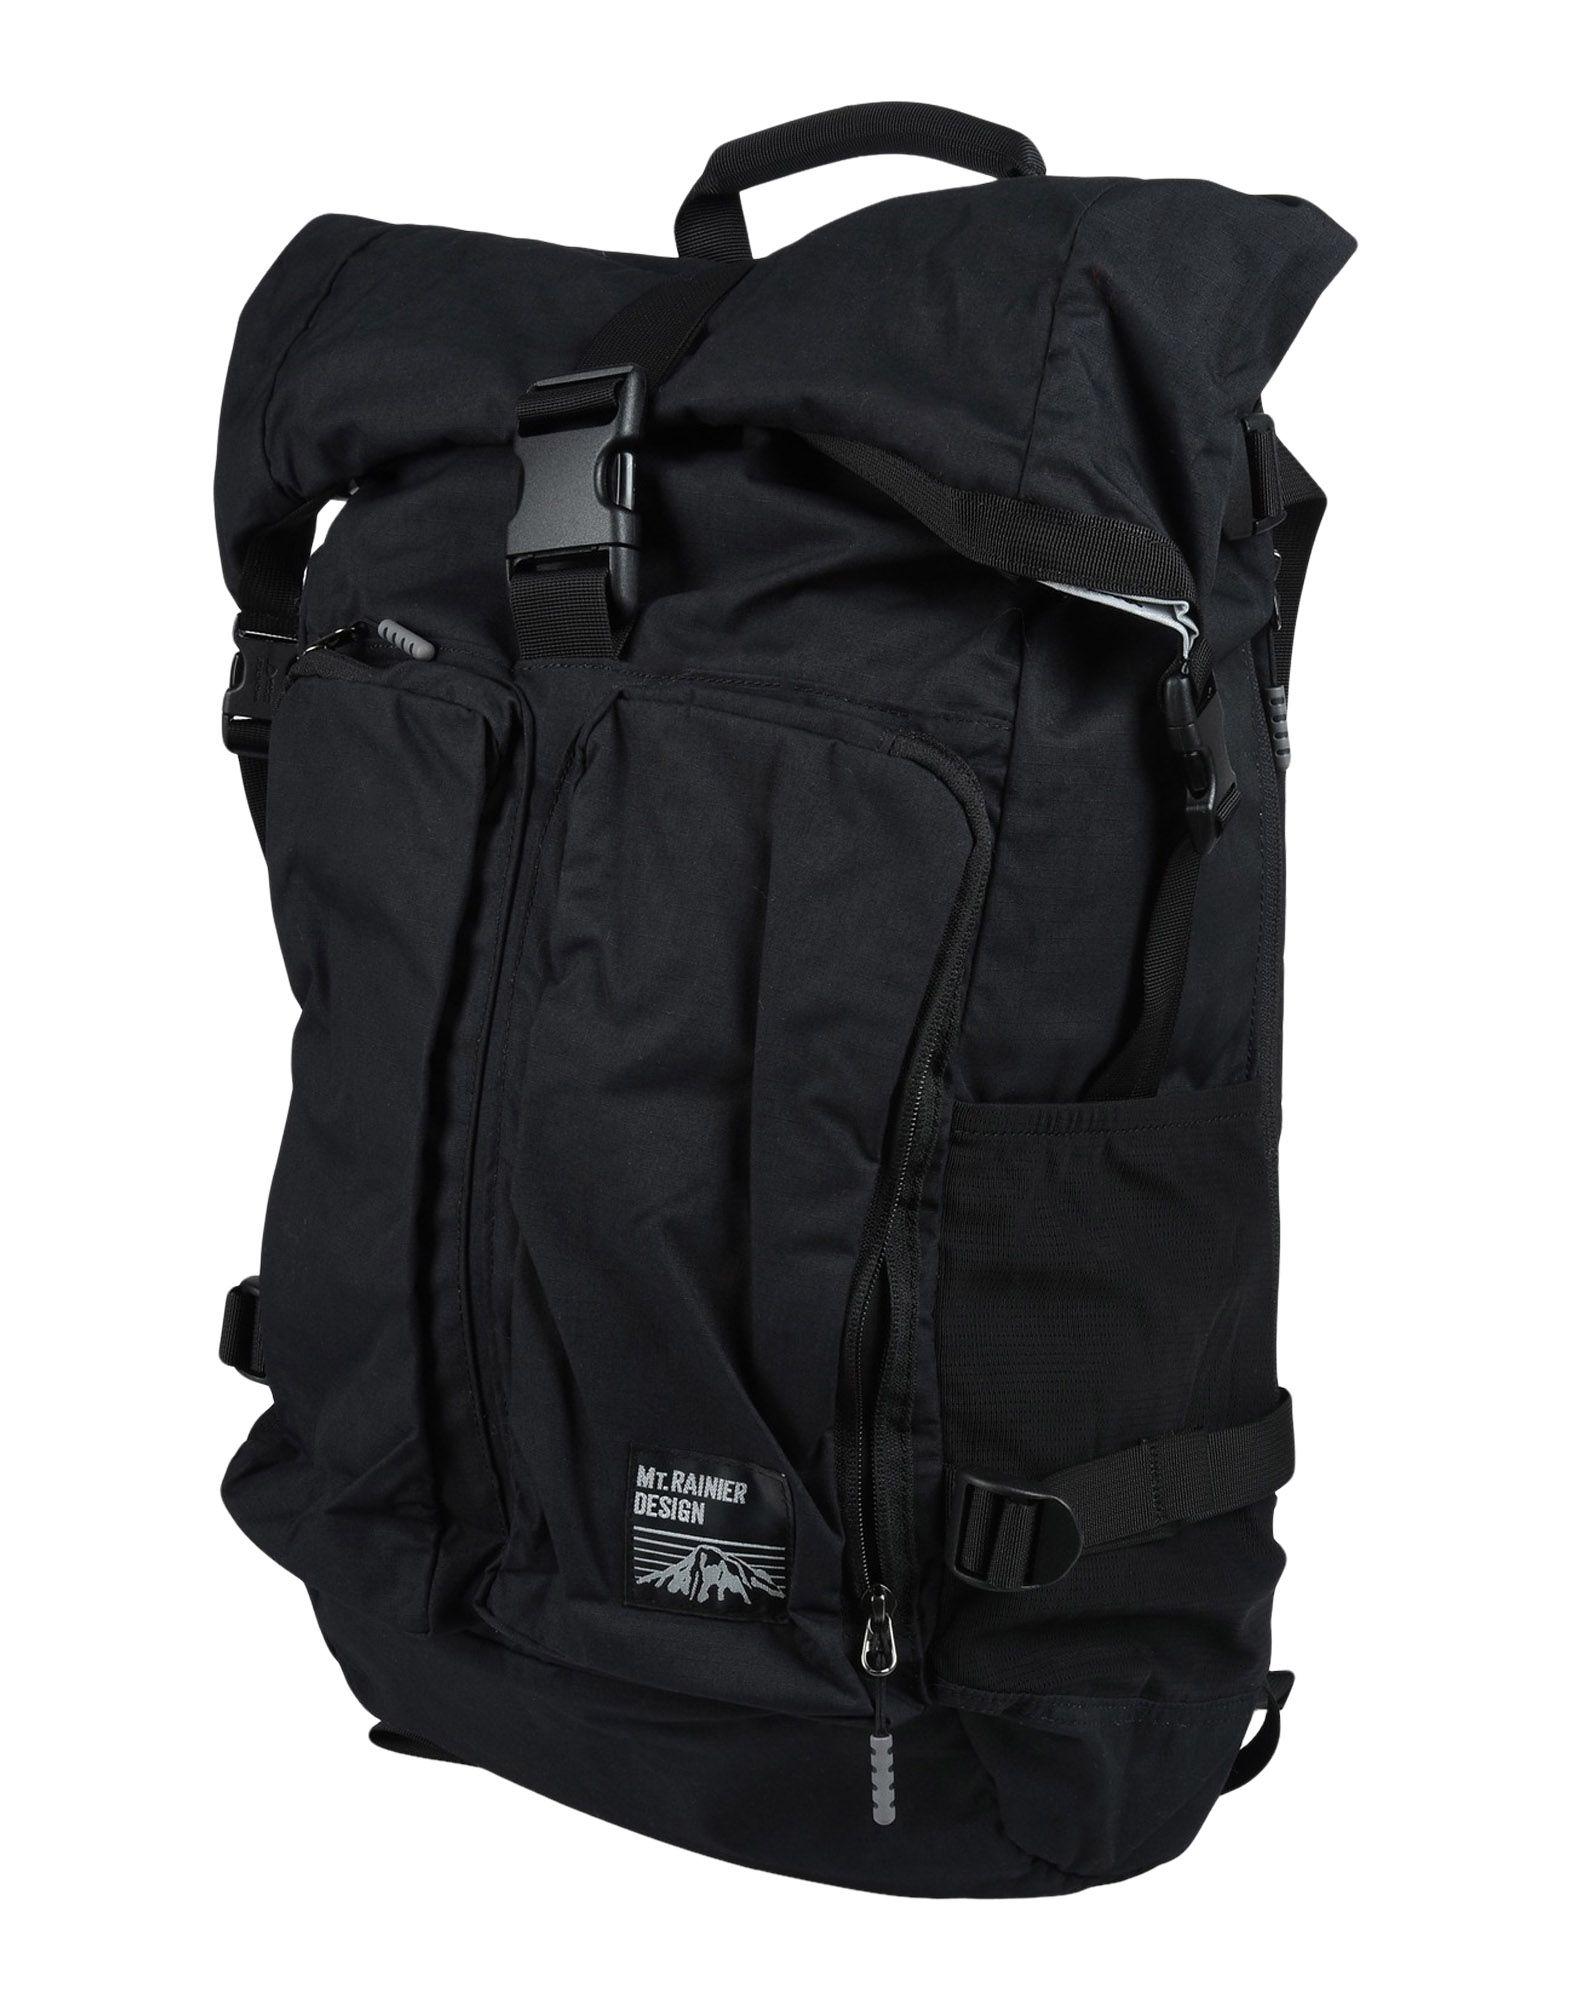 Lyst - Mt. Rainier Design Backpacks & Bum Bags in Black for Men